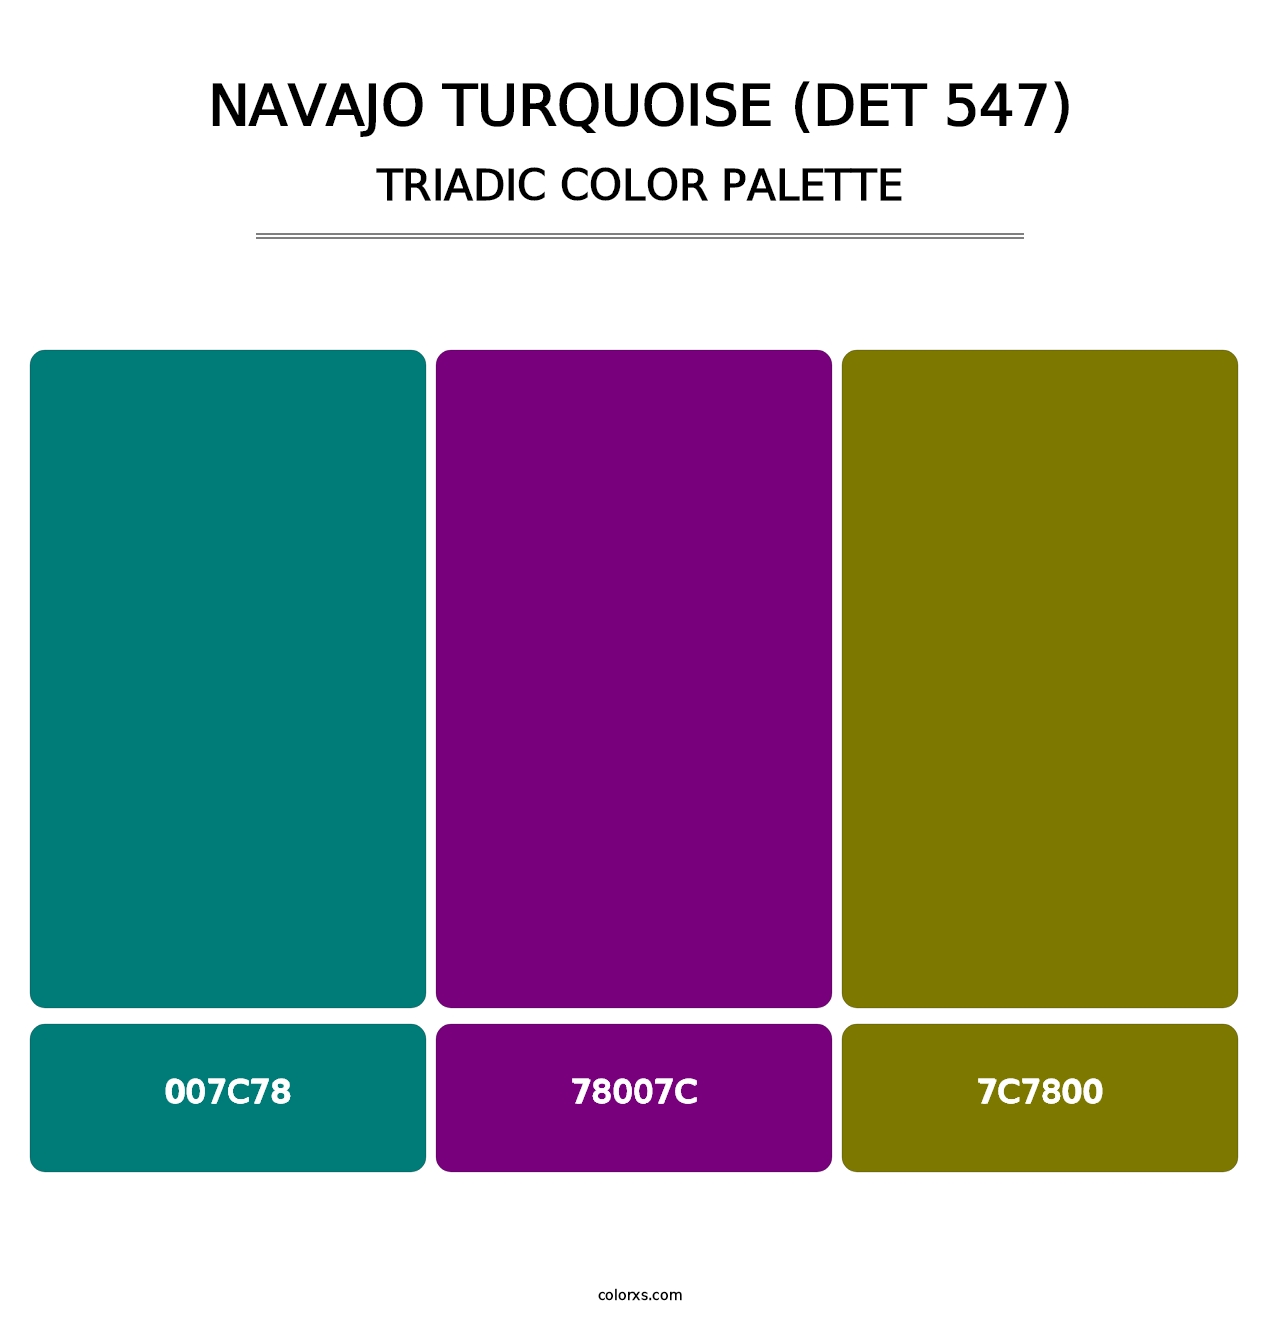 Navajo Turquoise (DET 547) - Triadic Color Palette